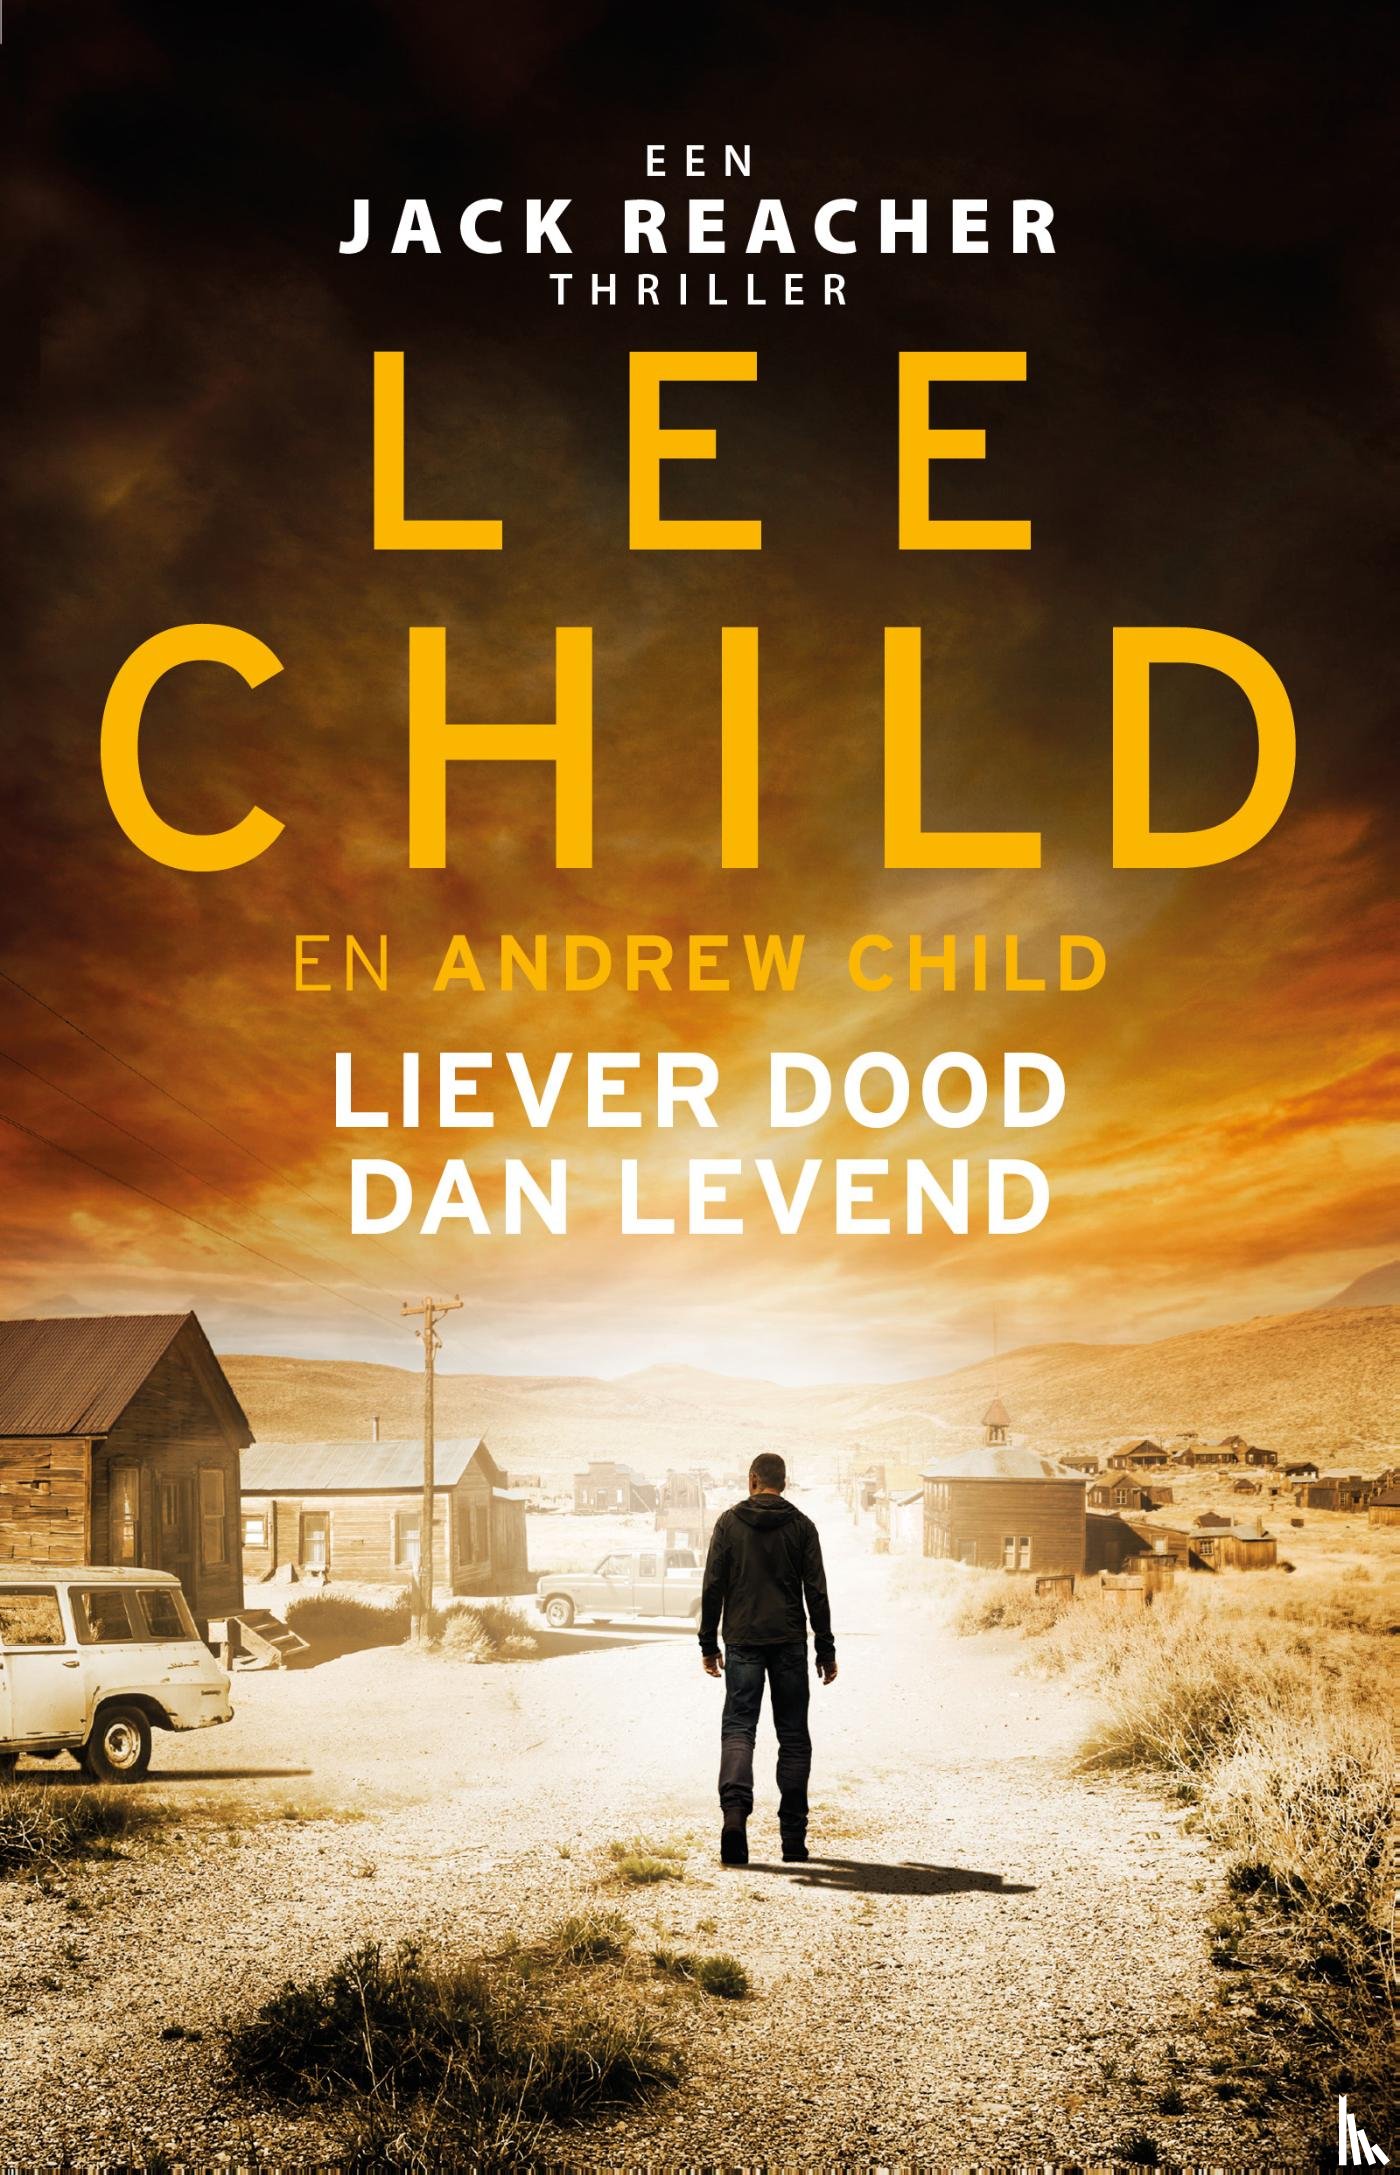 Child, Lee, Child, Andrew - Liever dood dan levend